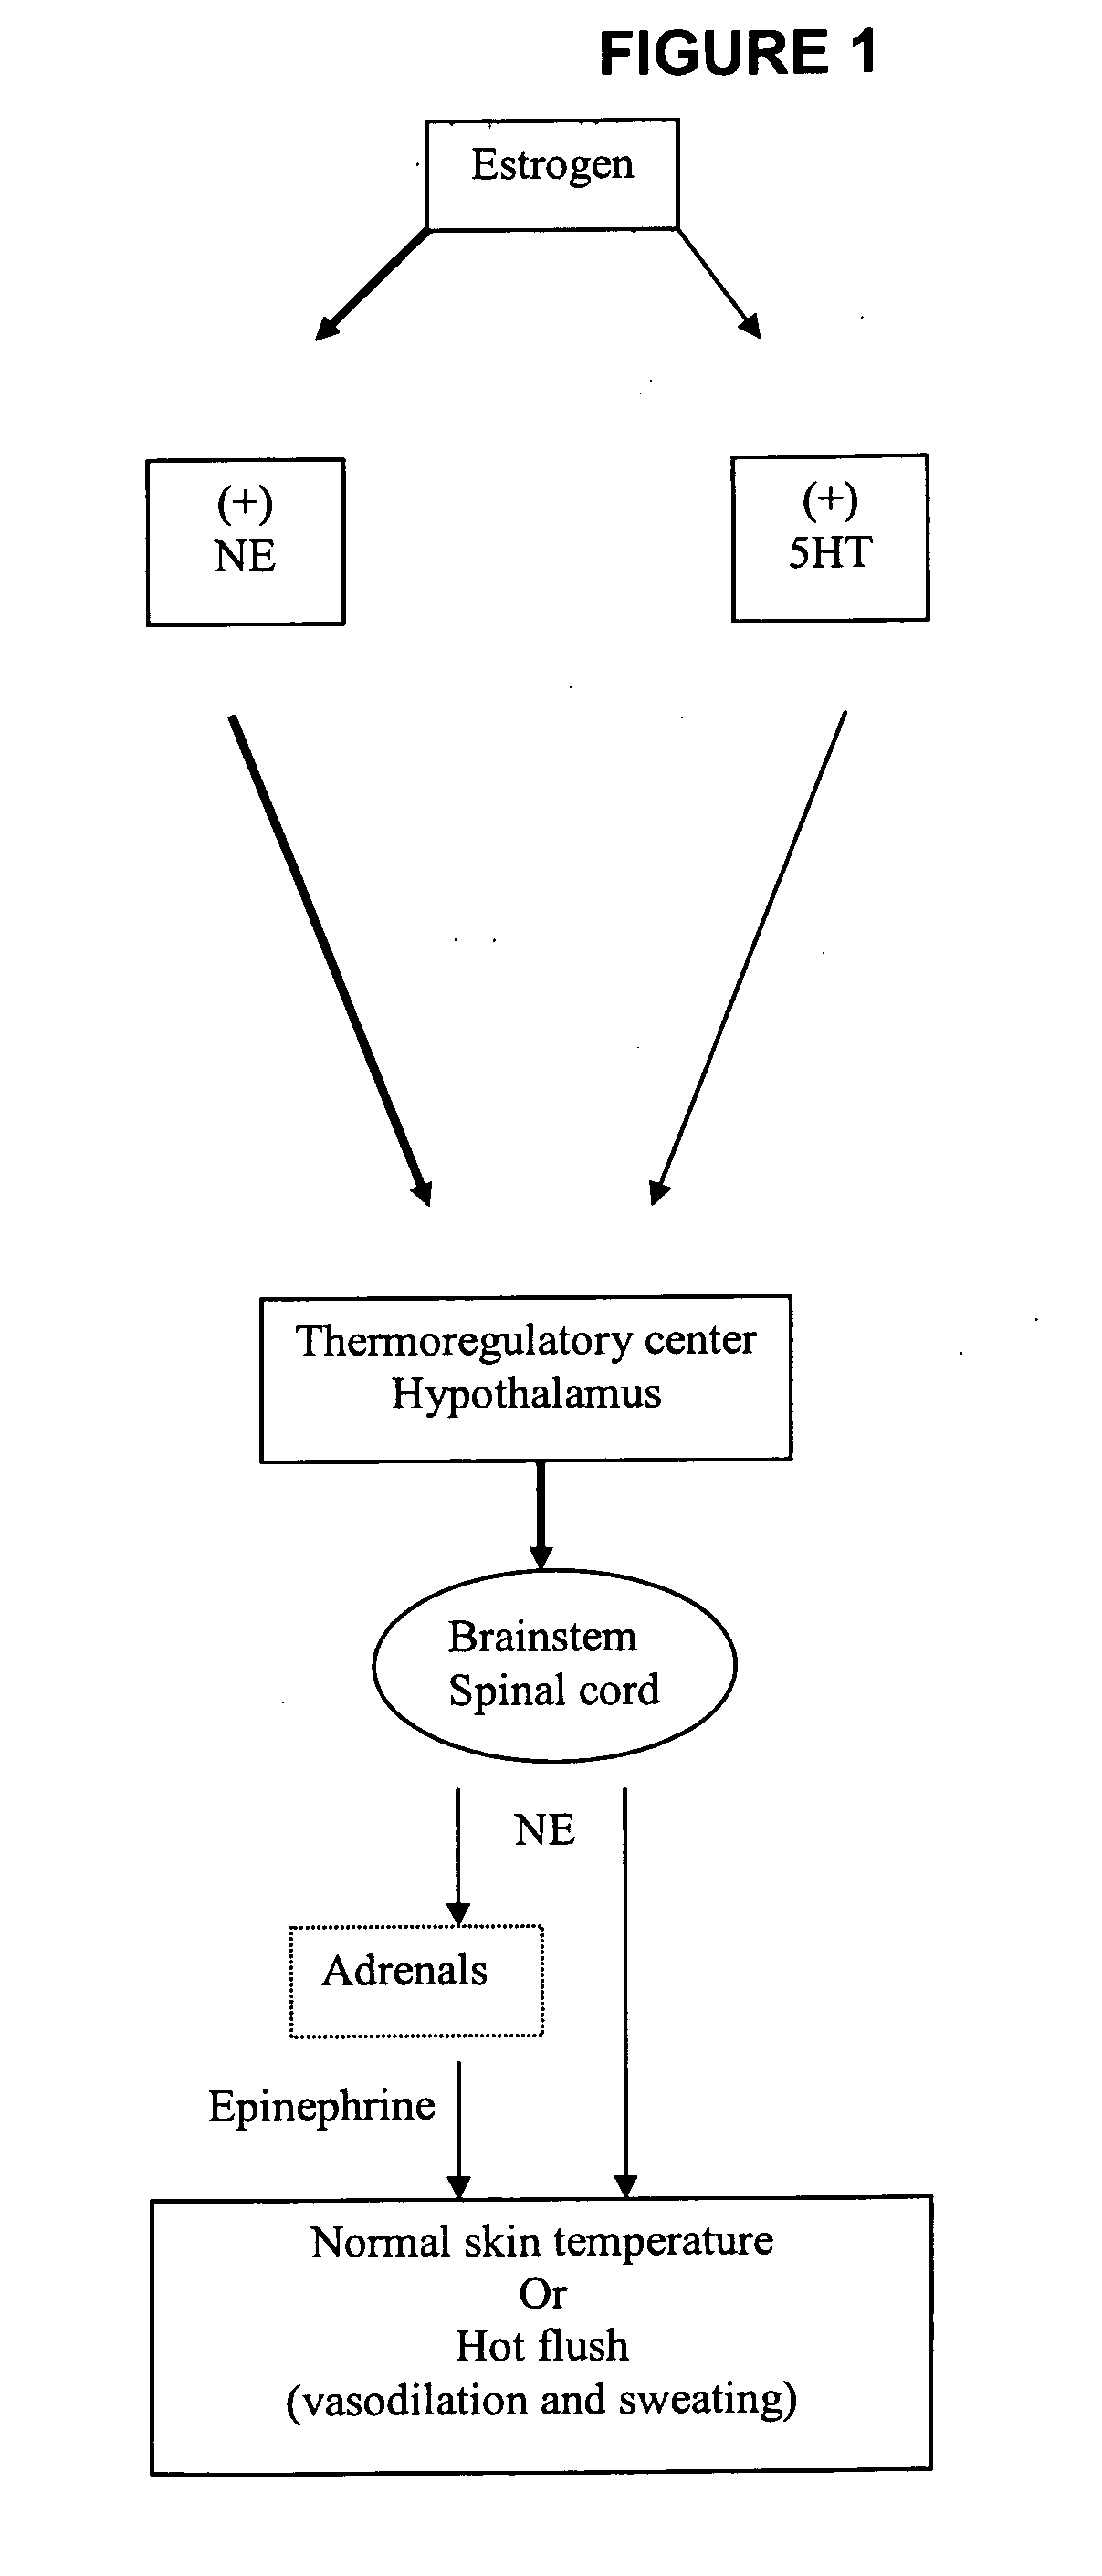 Benzothiadiazolylphenylalkylamine derivatives and methods of their use